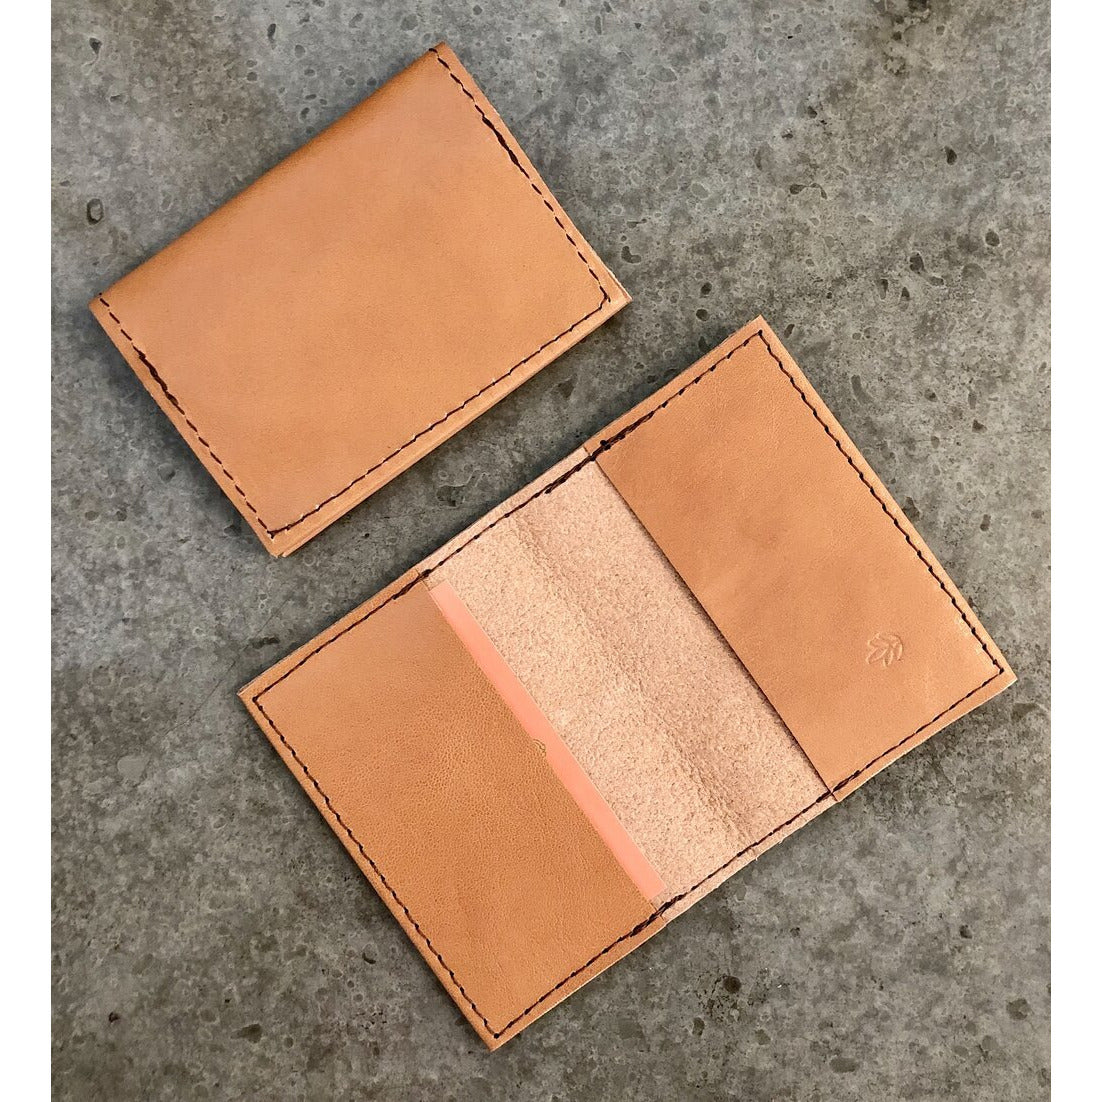 Leather Slimfold Wallet in light tan